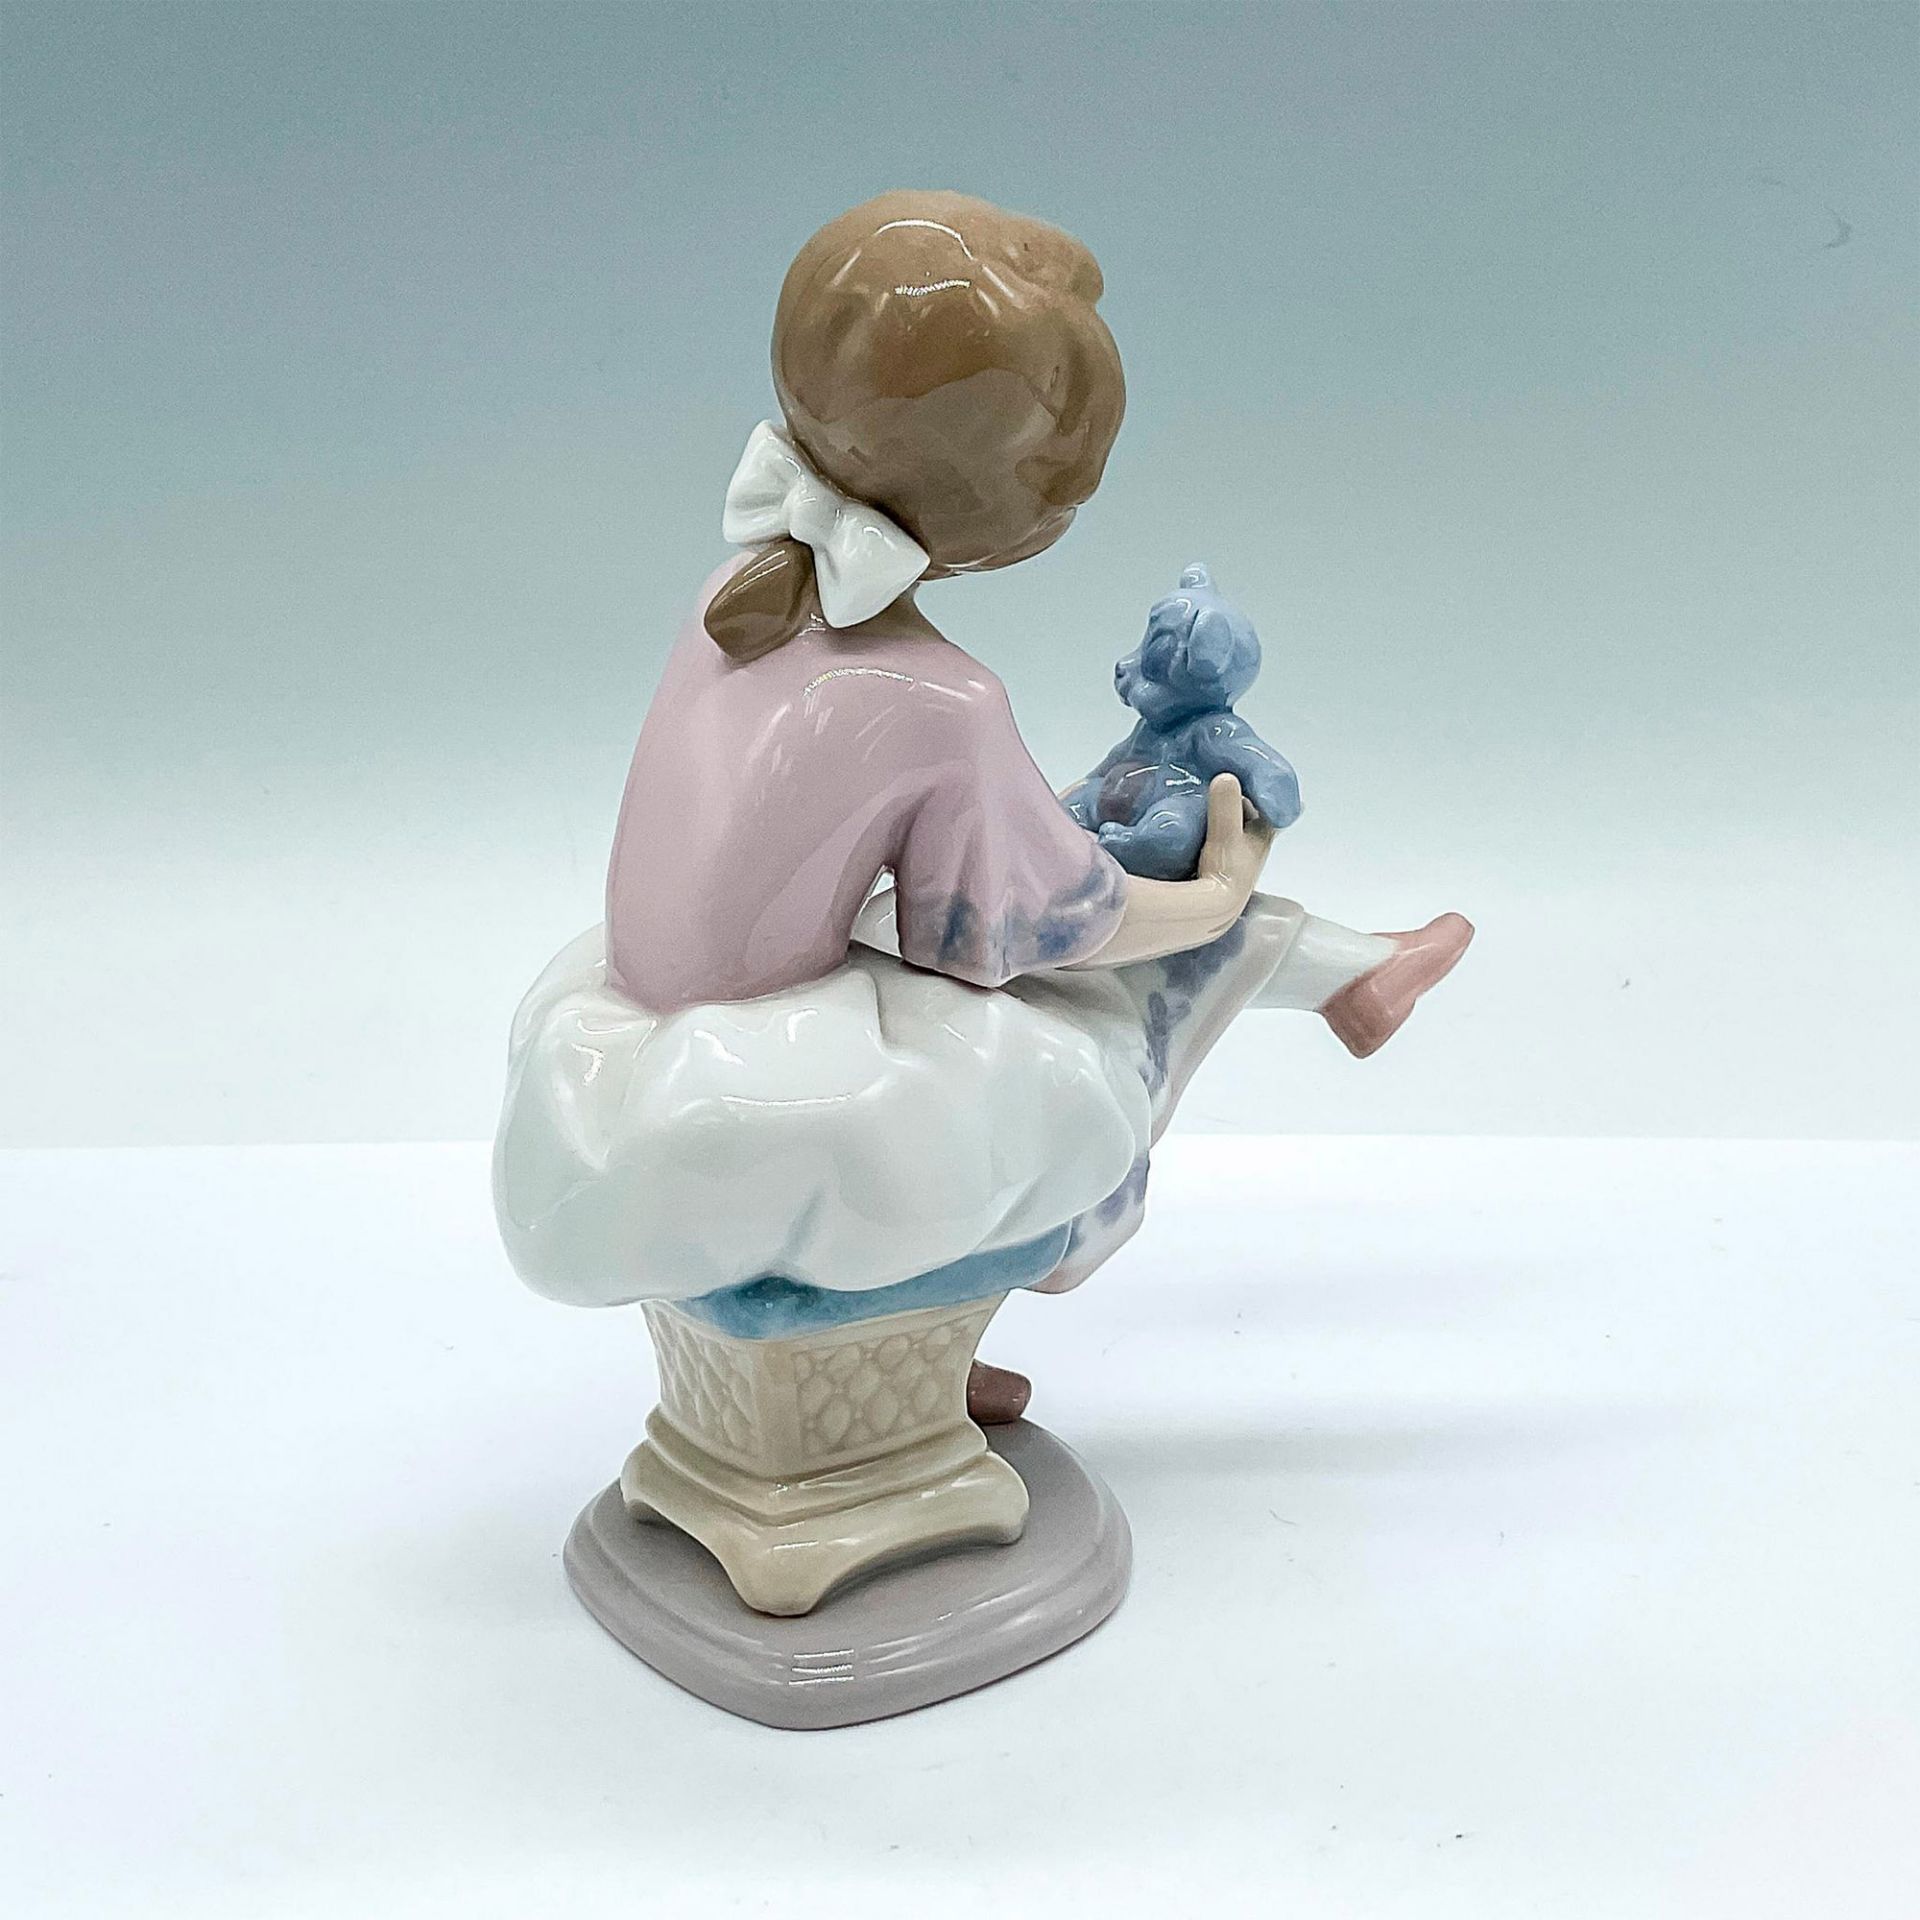 Best Friend 10047620 - Lladro Porcelain Figurine - Image 2 of 3